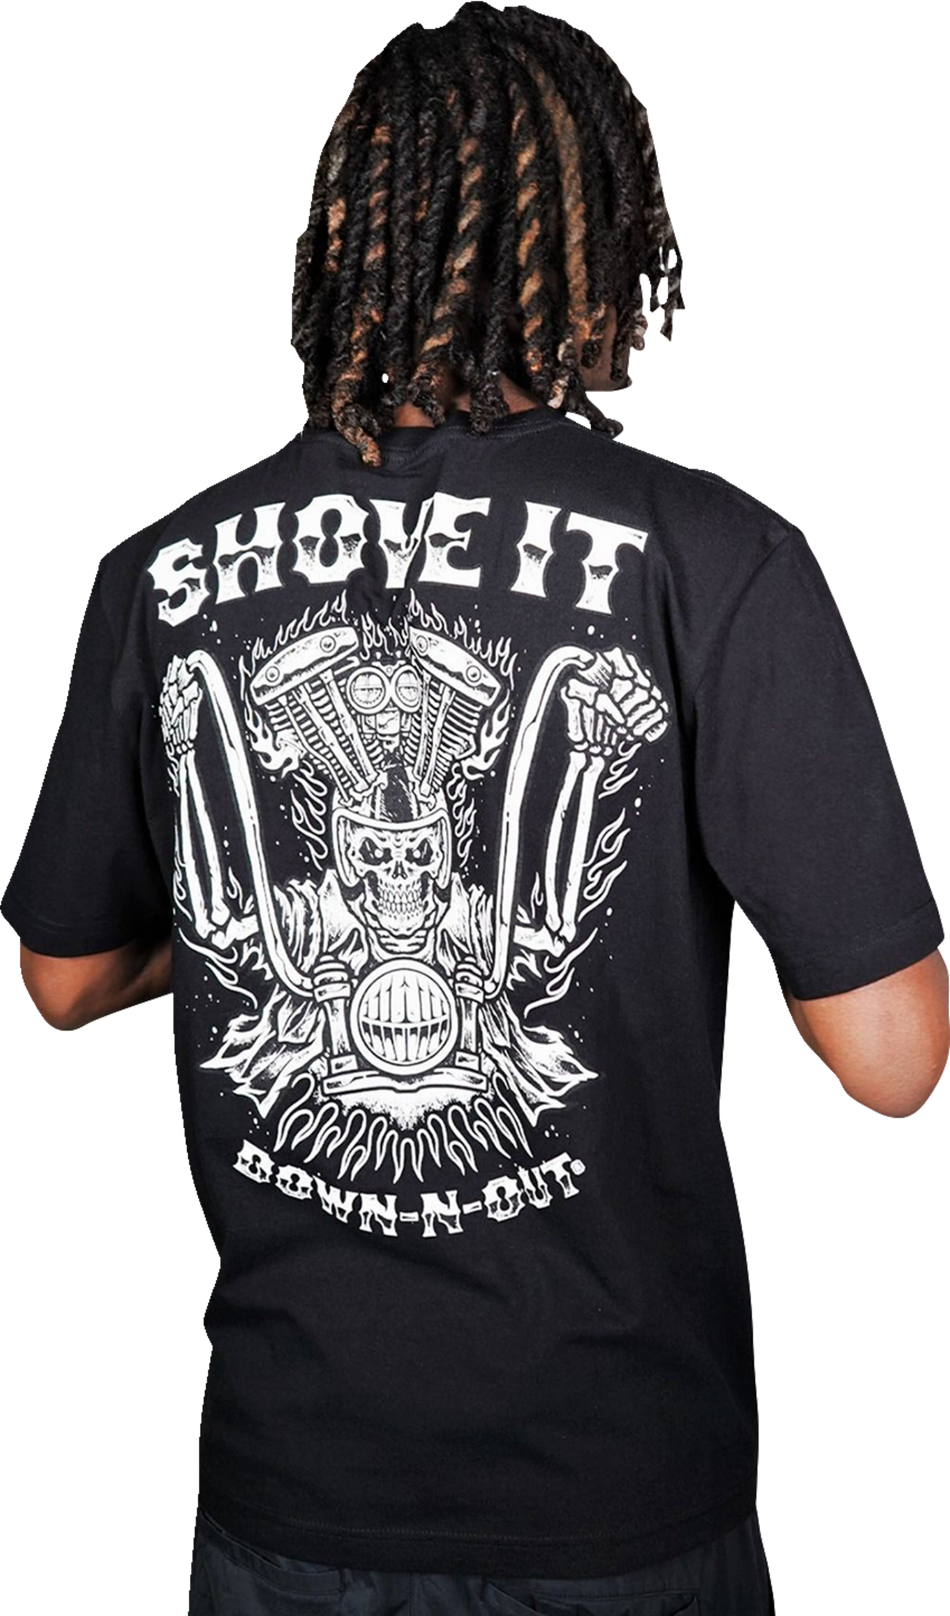 LETHAL THREAT Down-N-Out Shove It T-Shirt - Black - Large DT10046L